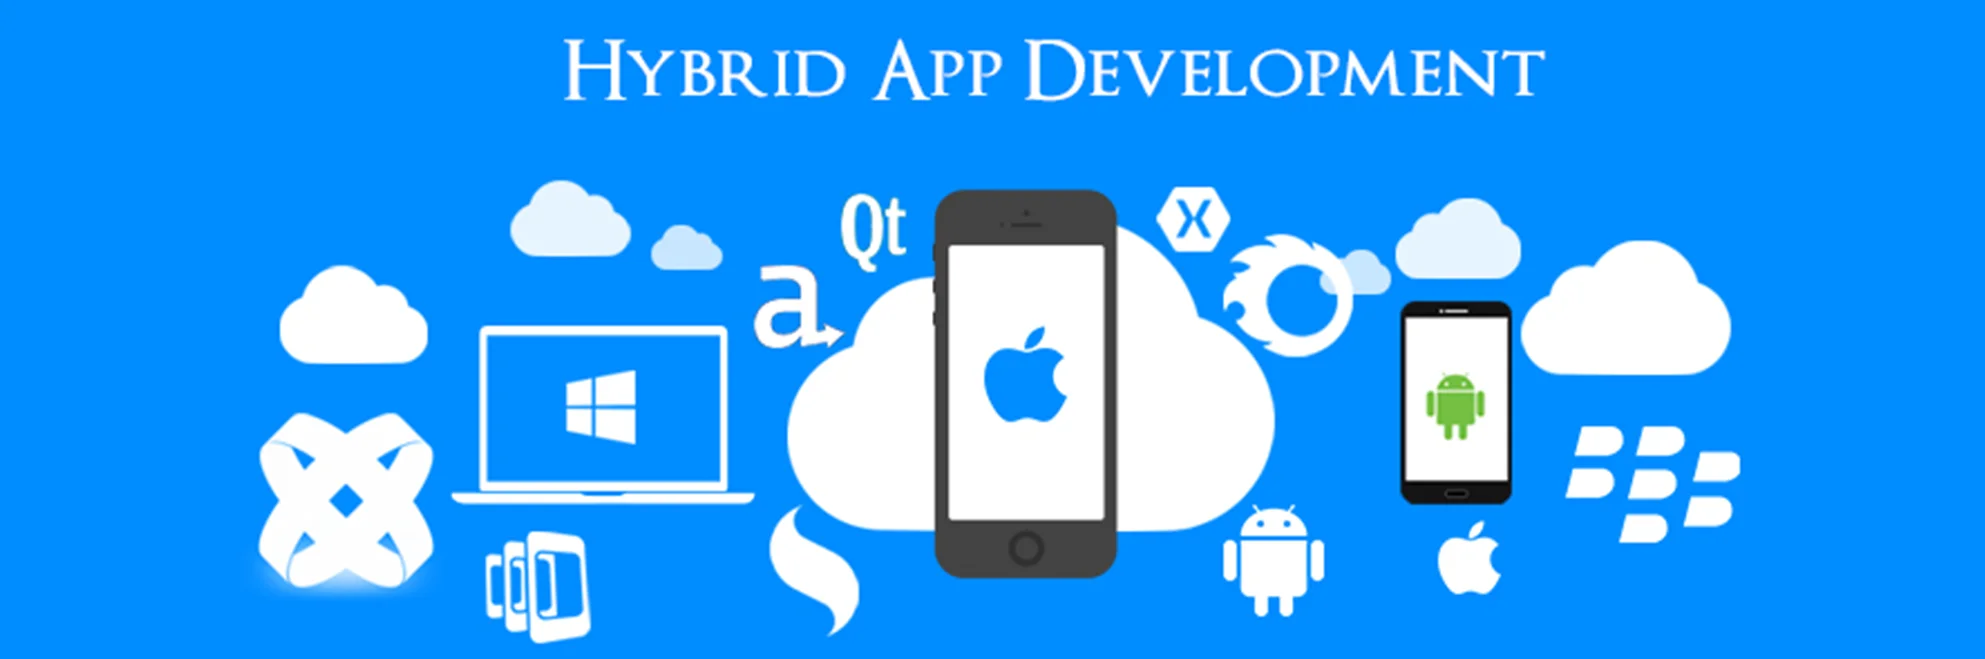 iPhone Application Development 